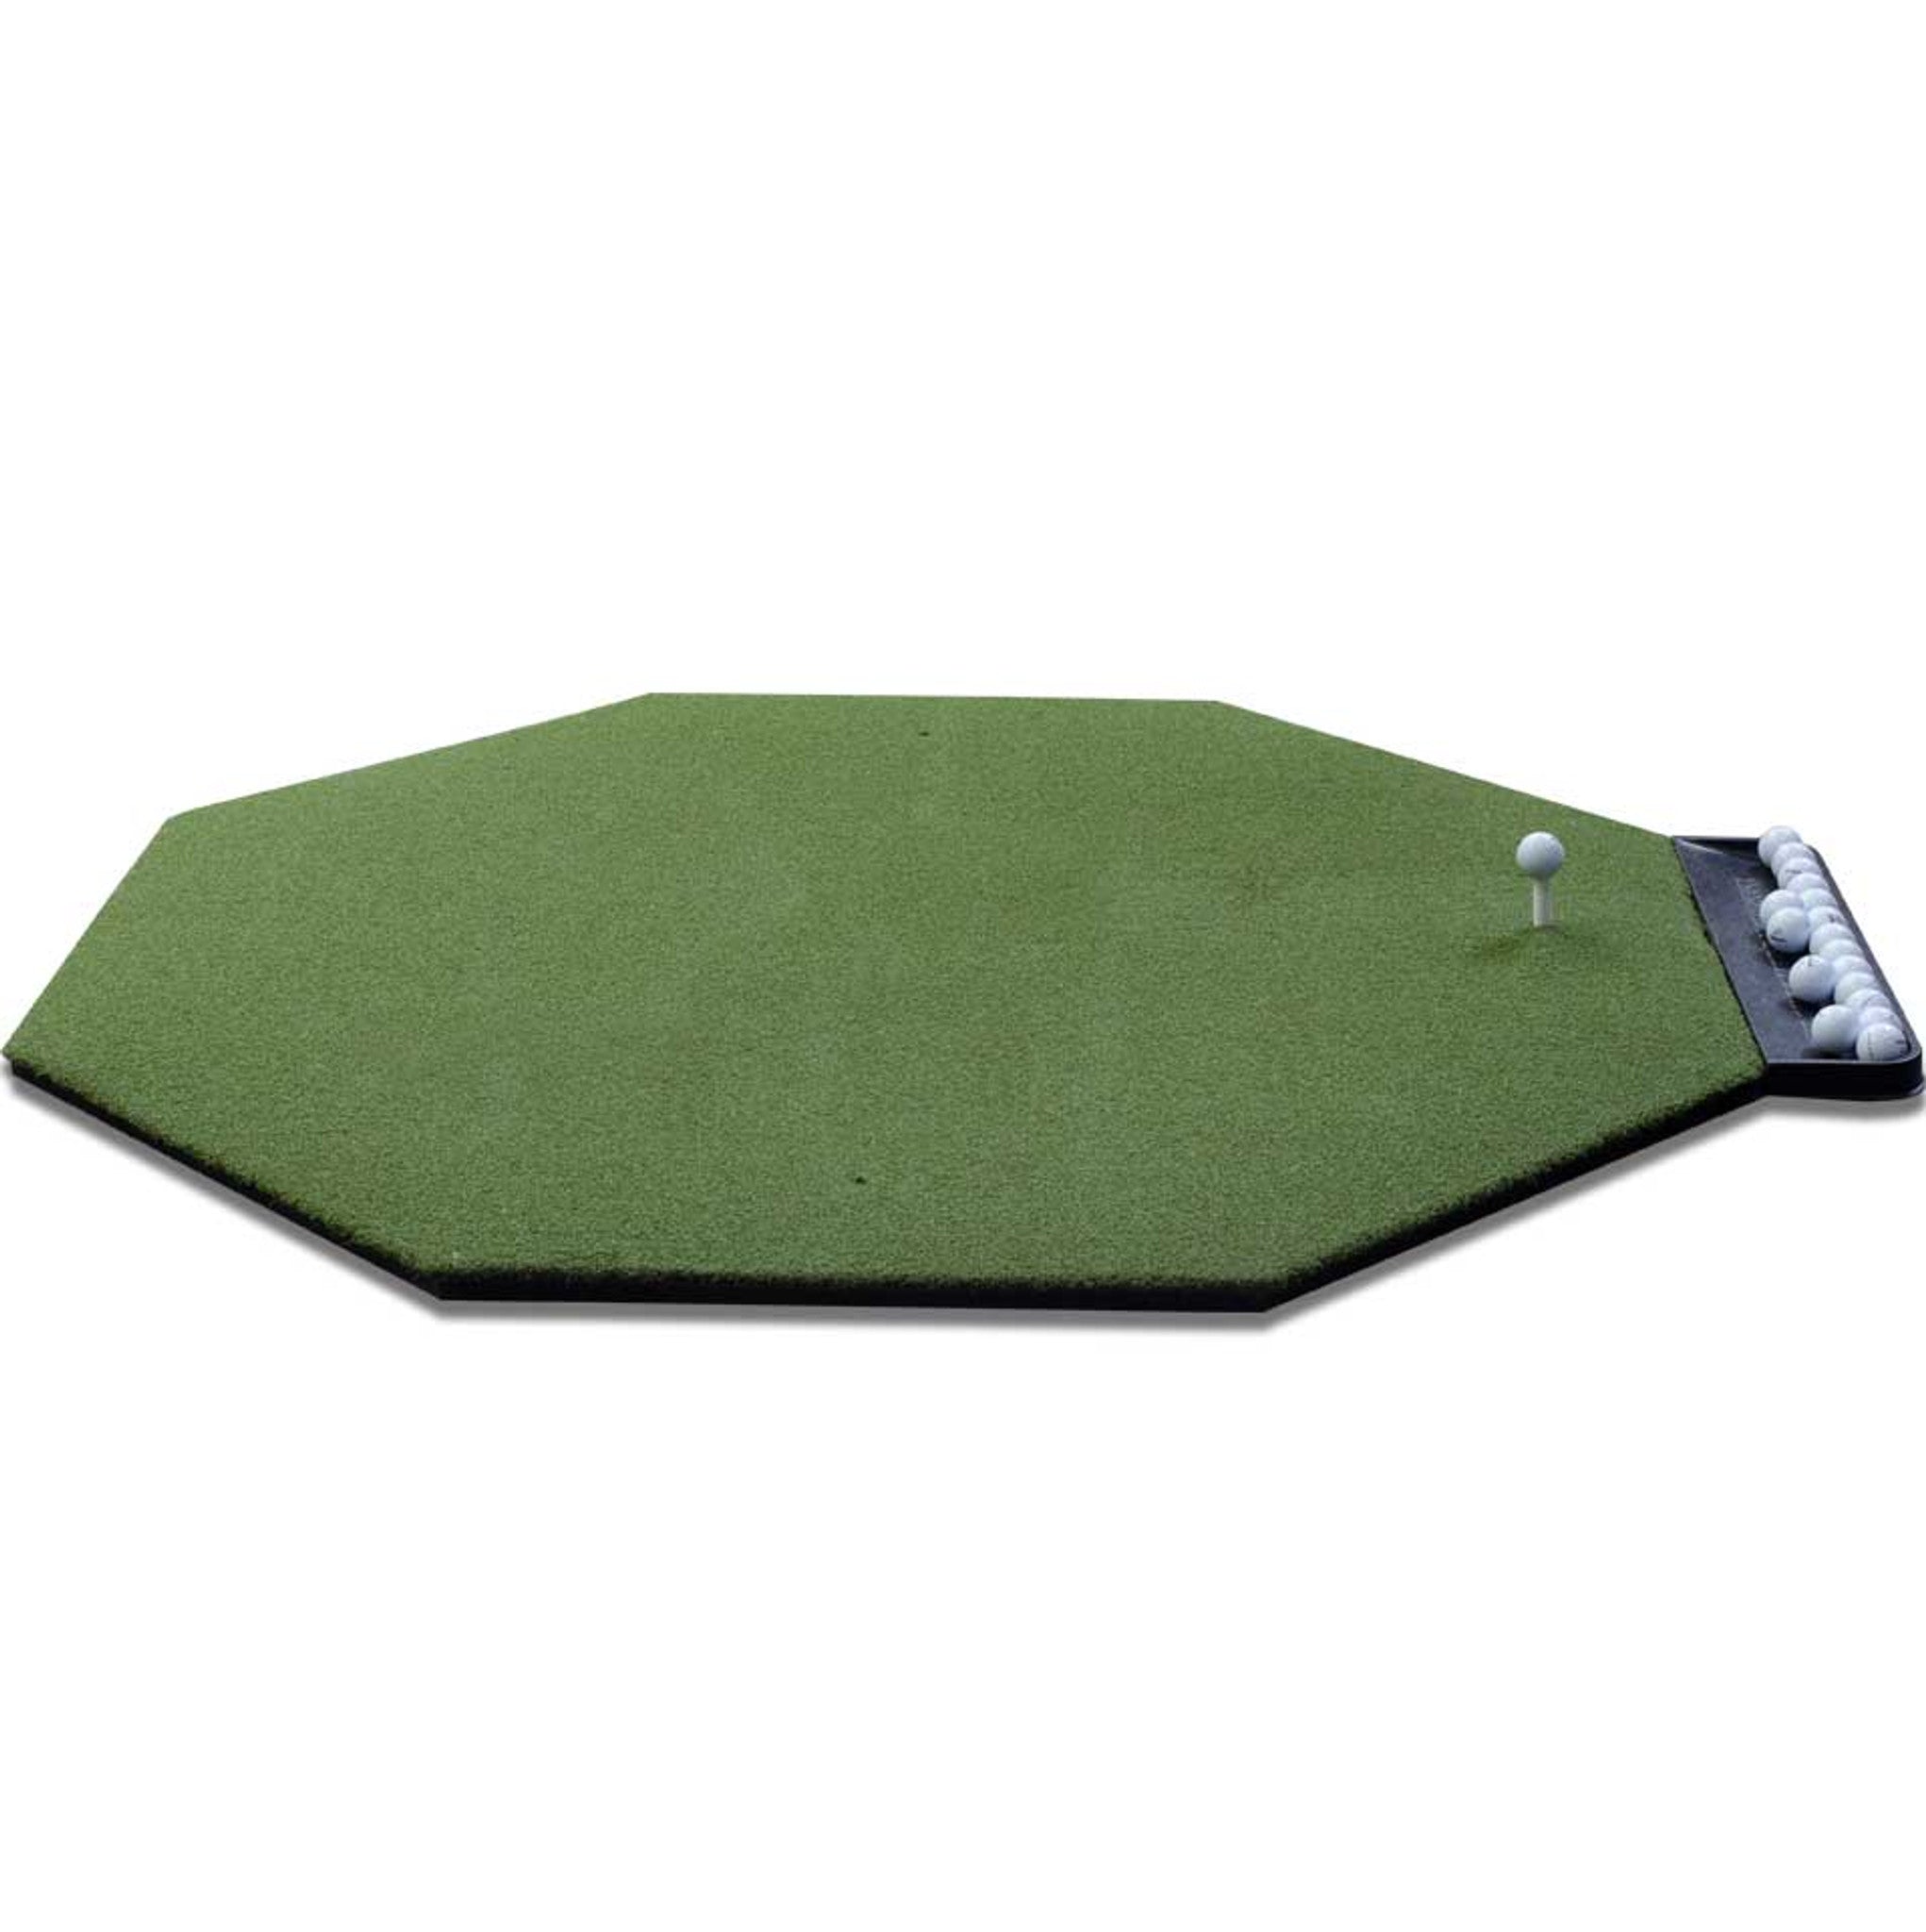 5 Star Premium Residential Golf Mat